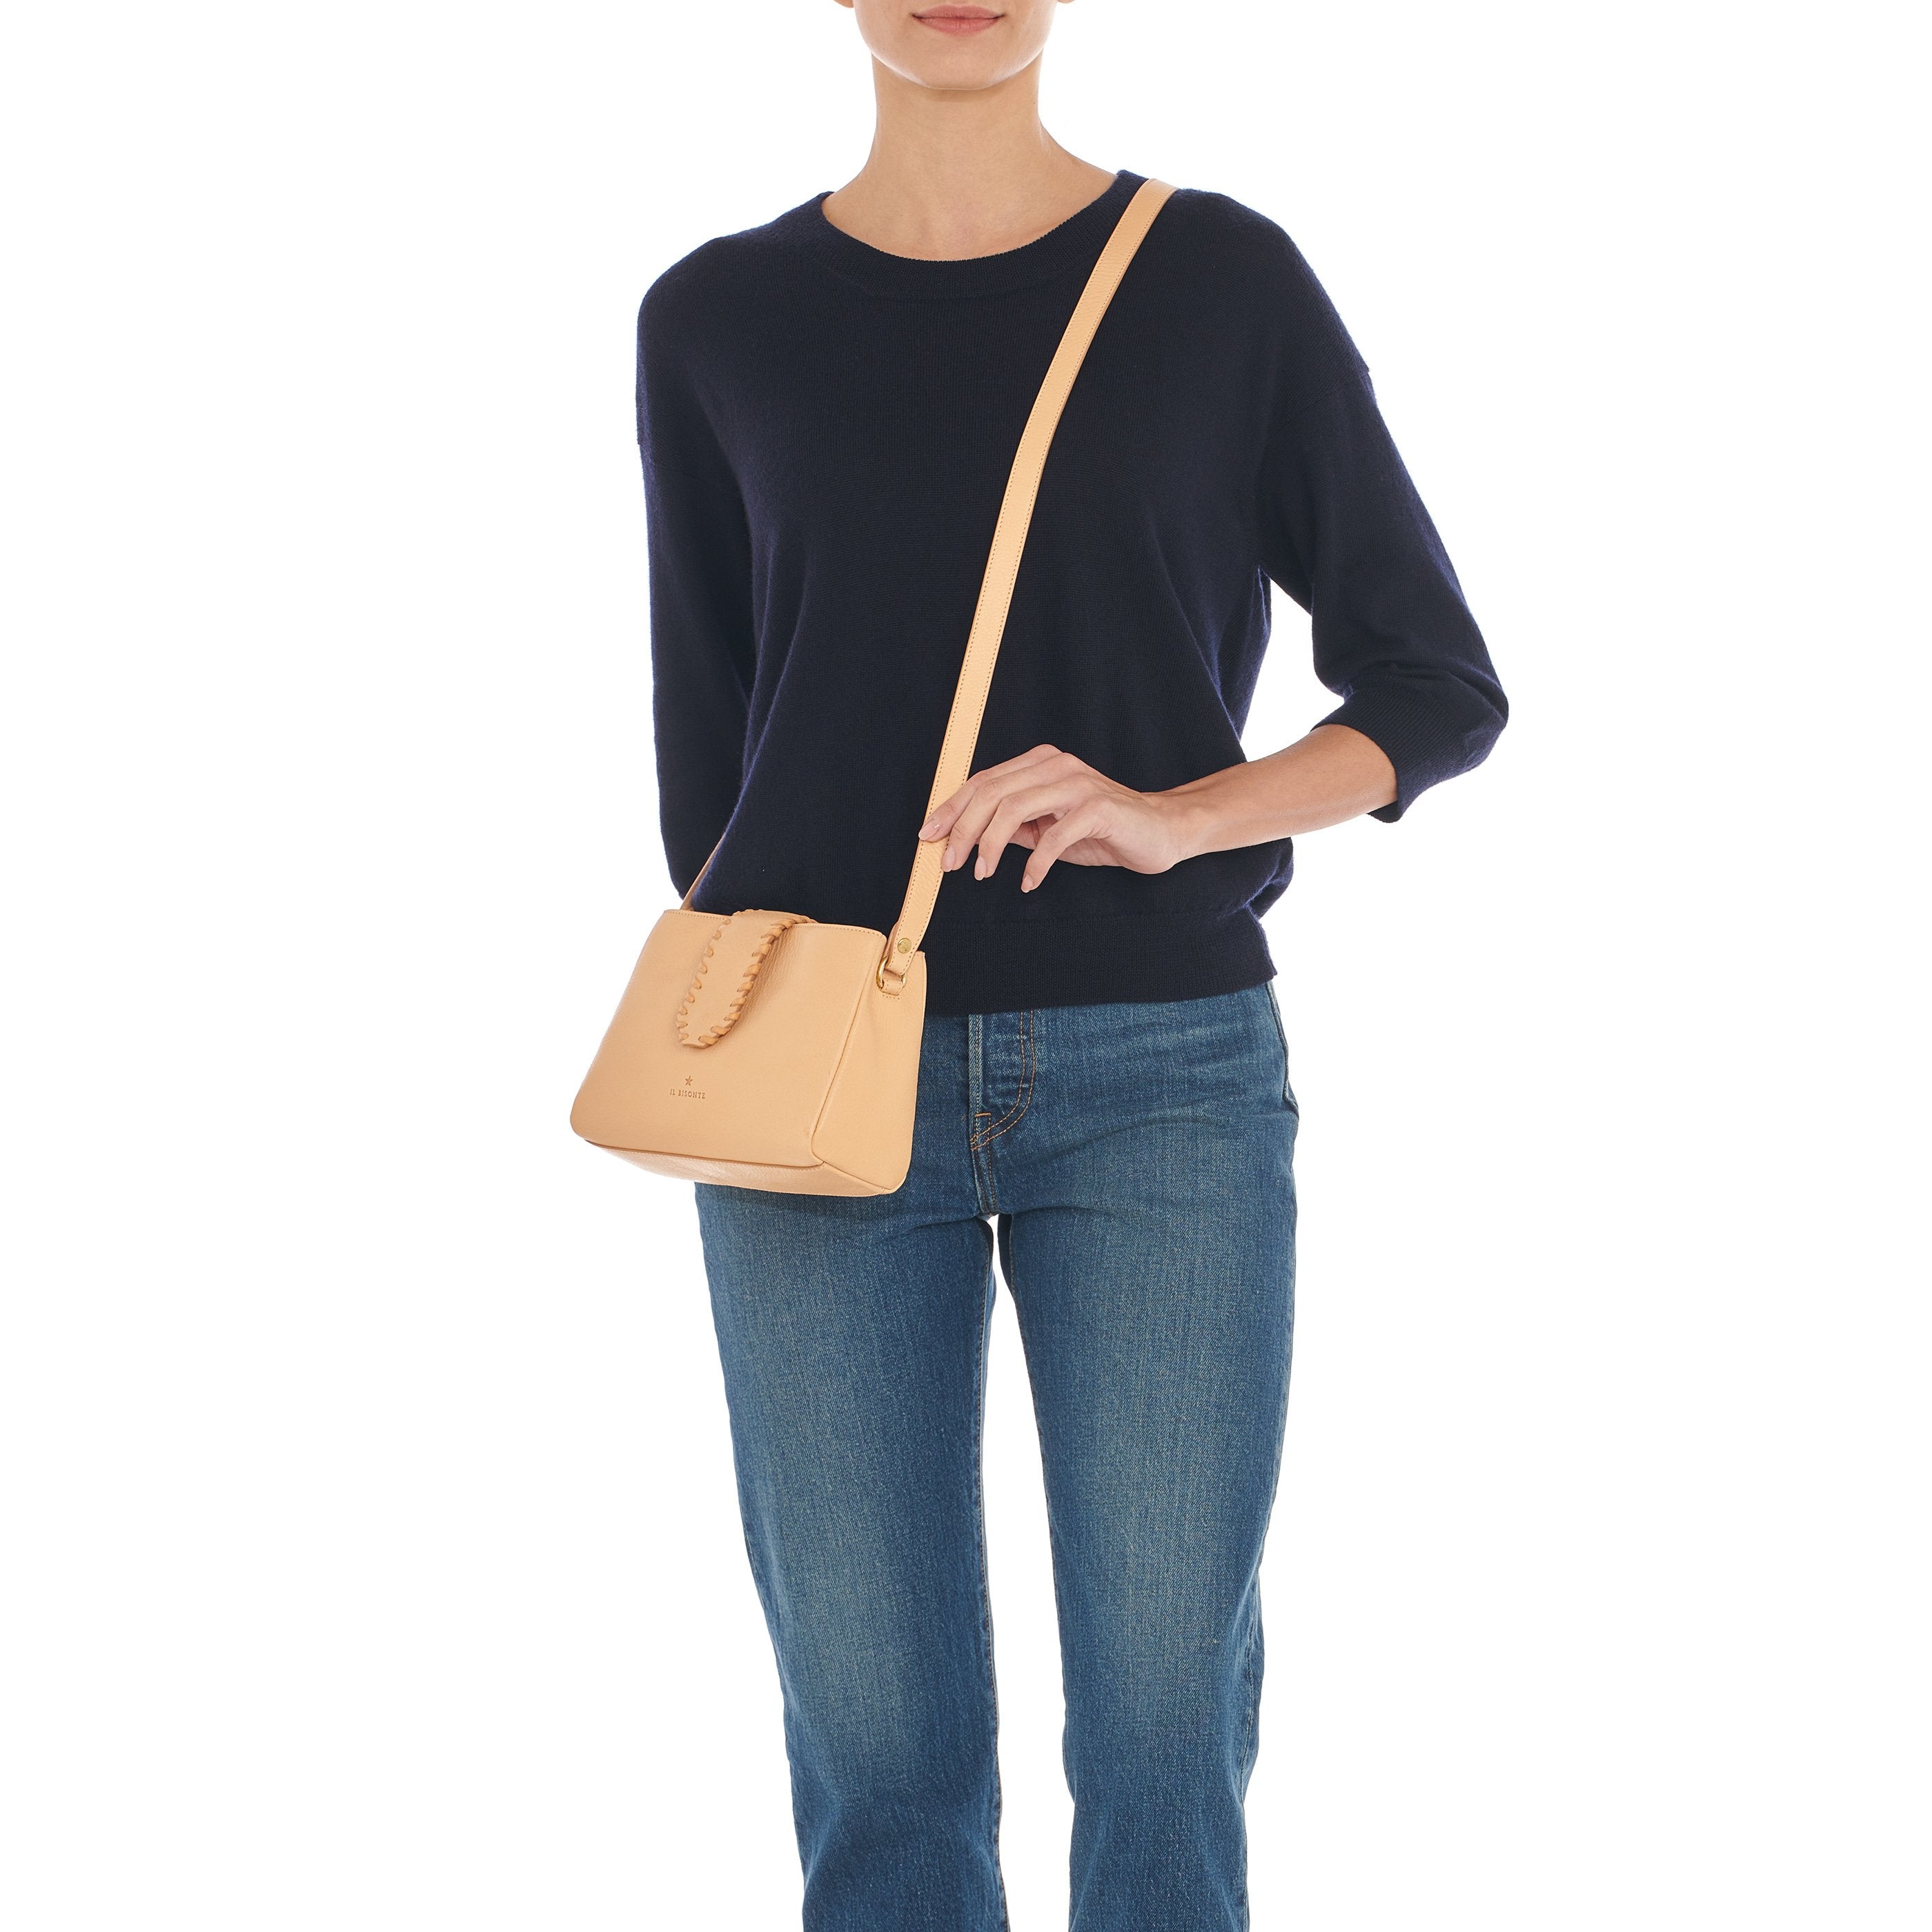 La fiaba | Women's crossbody bag in leather color natural